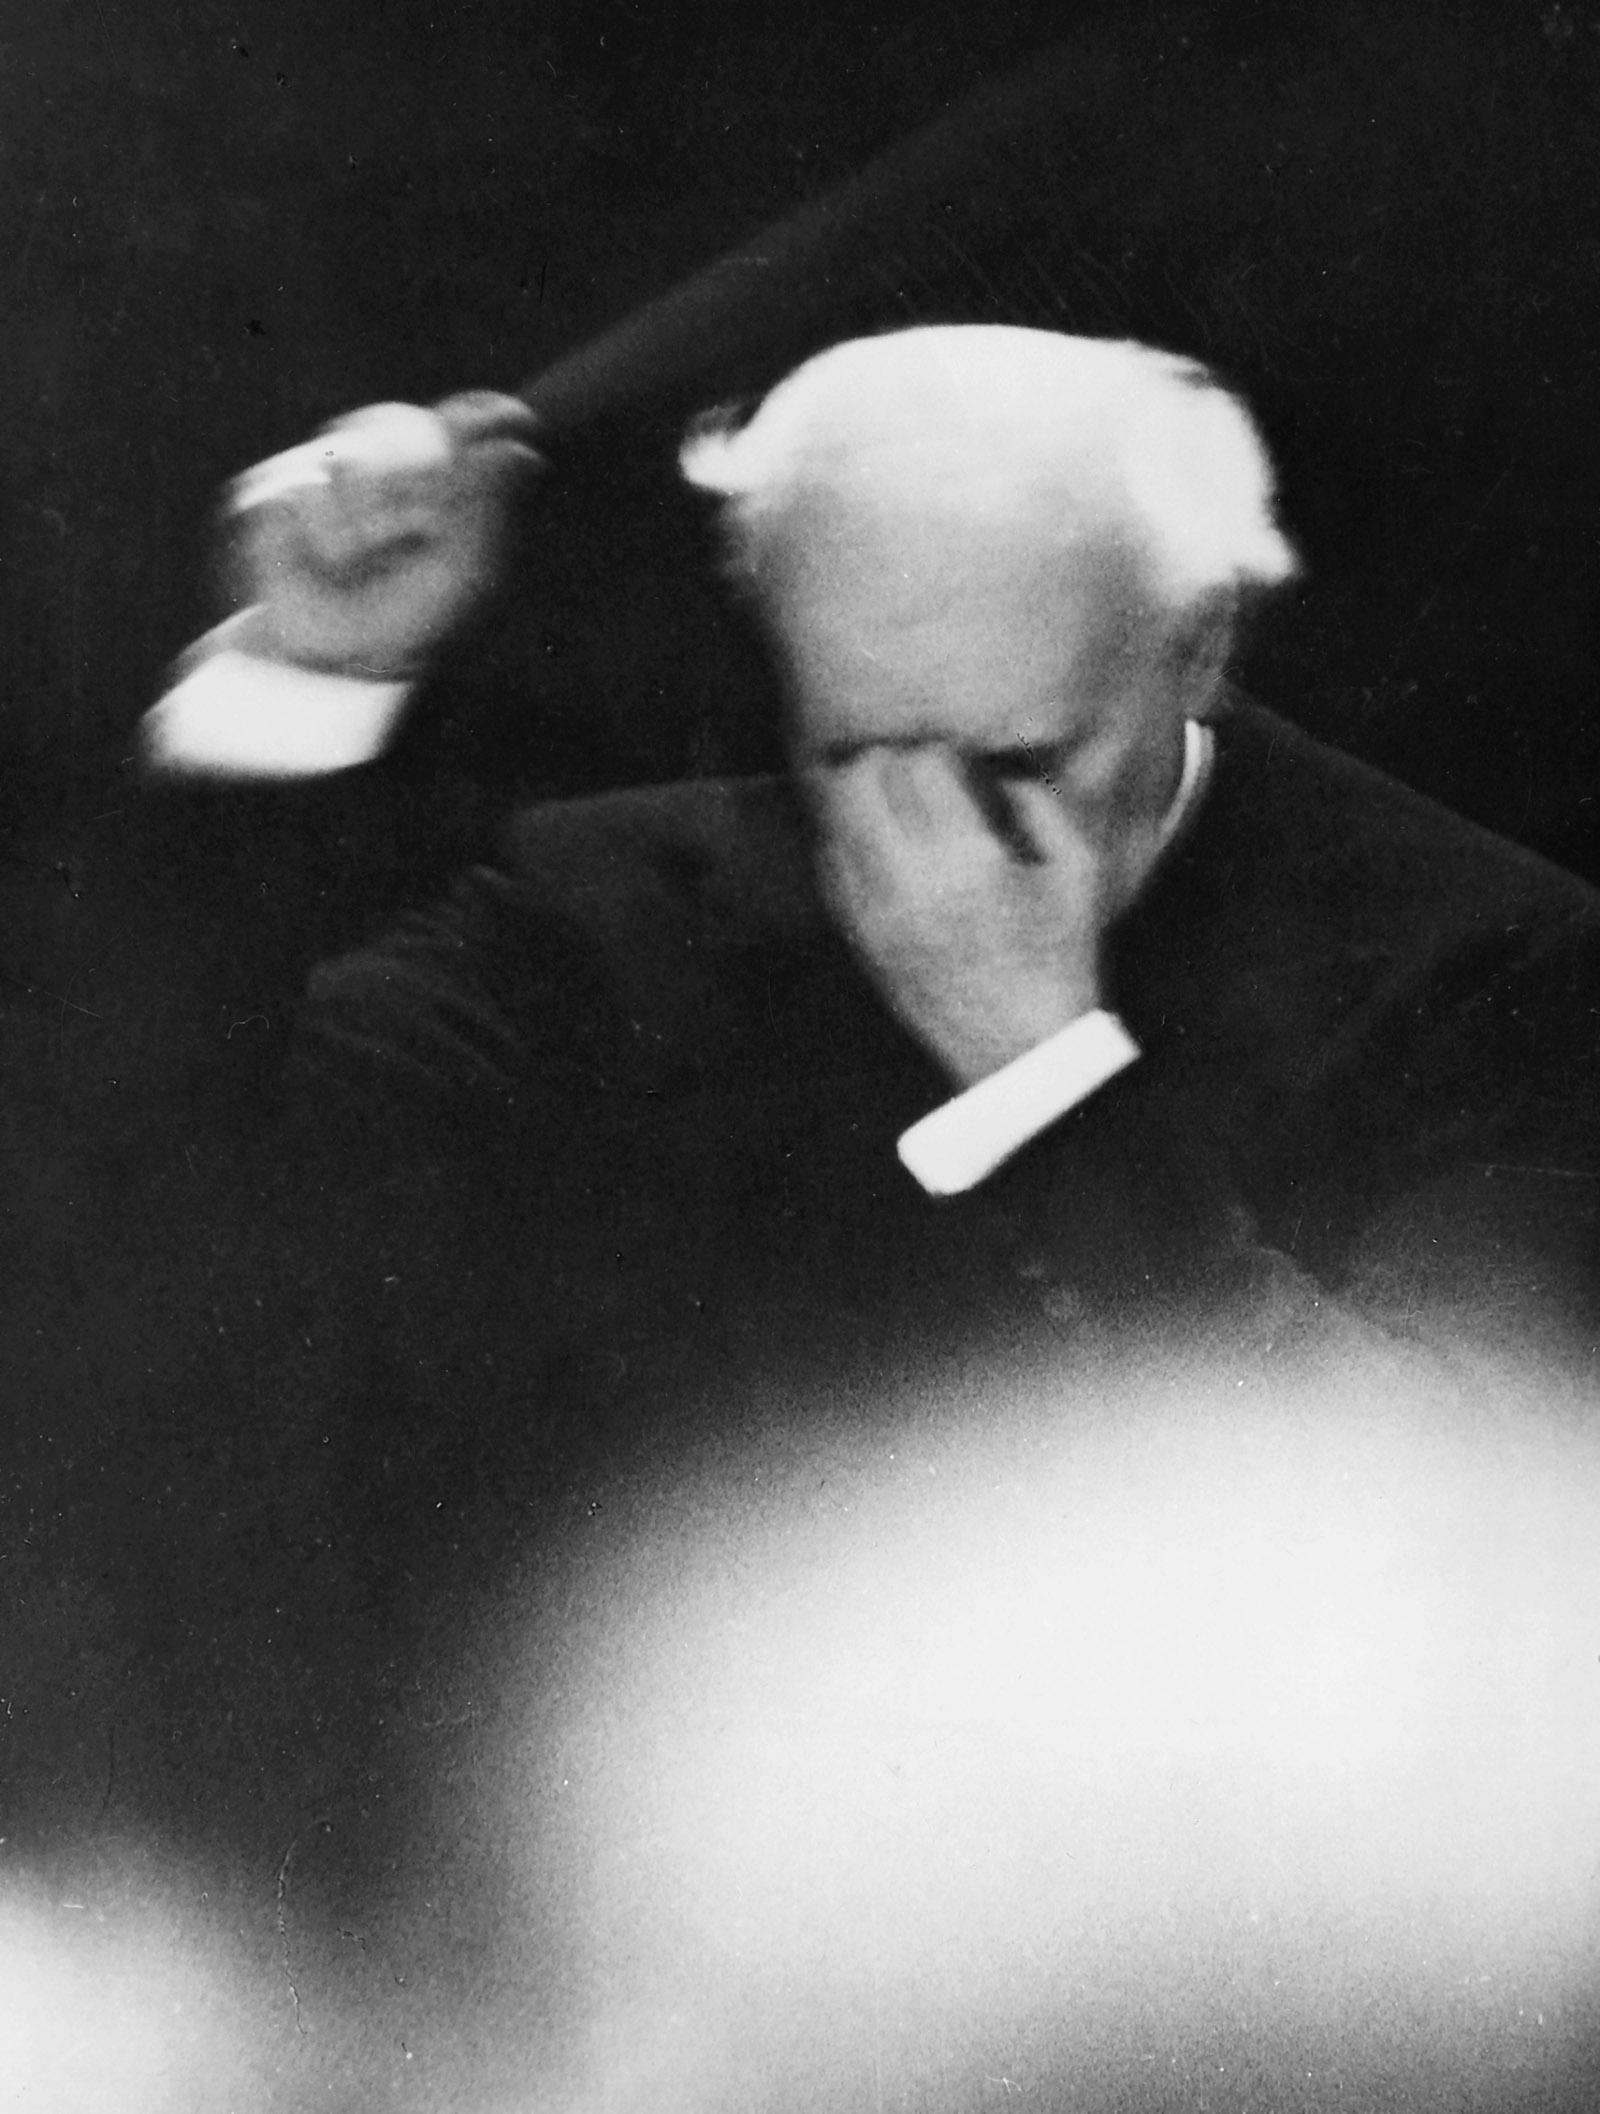 Arturo Toscanini conducting his last concert with the NBC Symphony Orchestra, April 1954